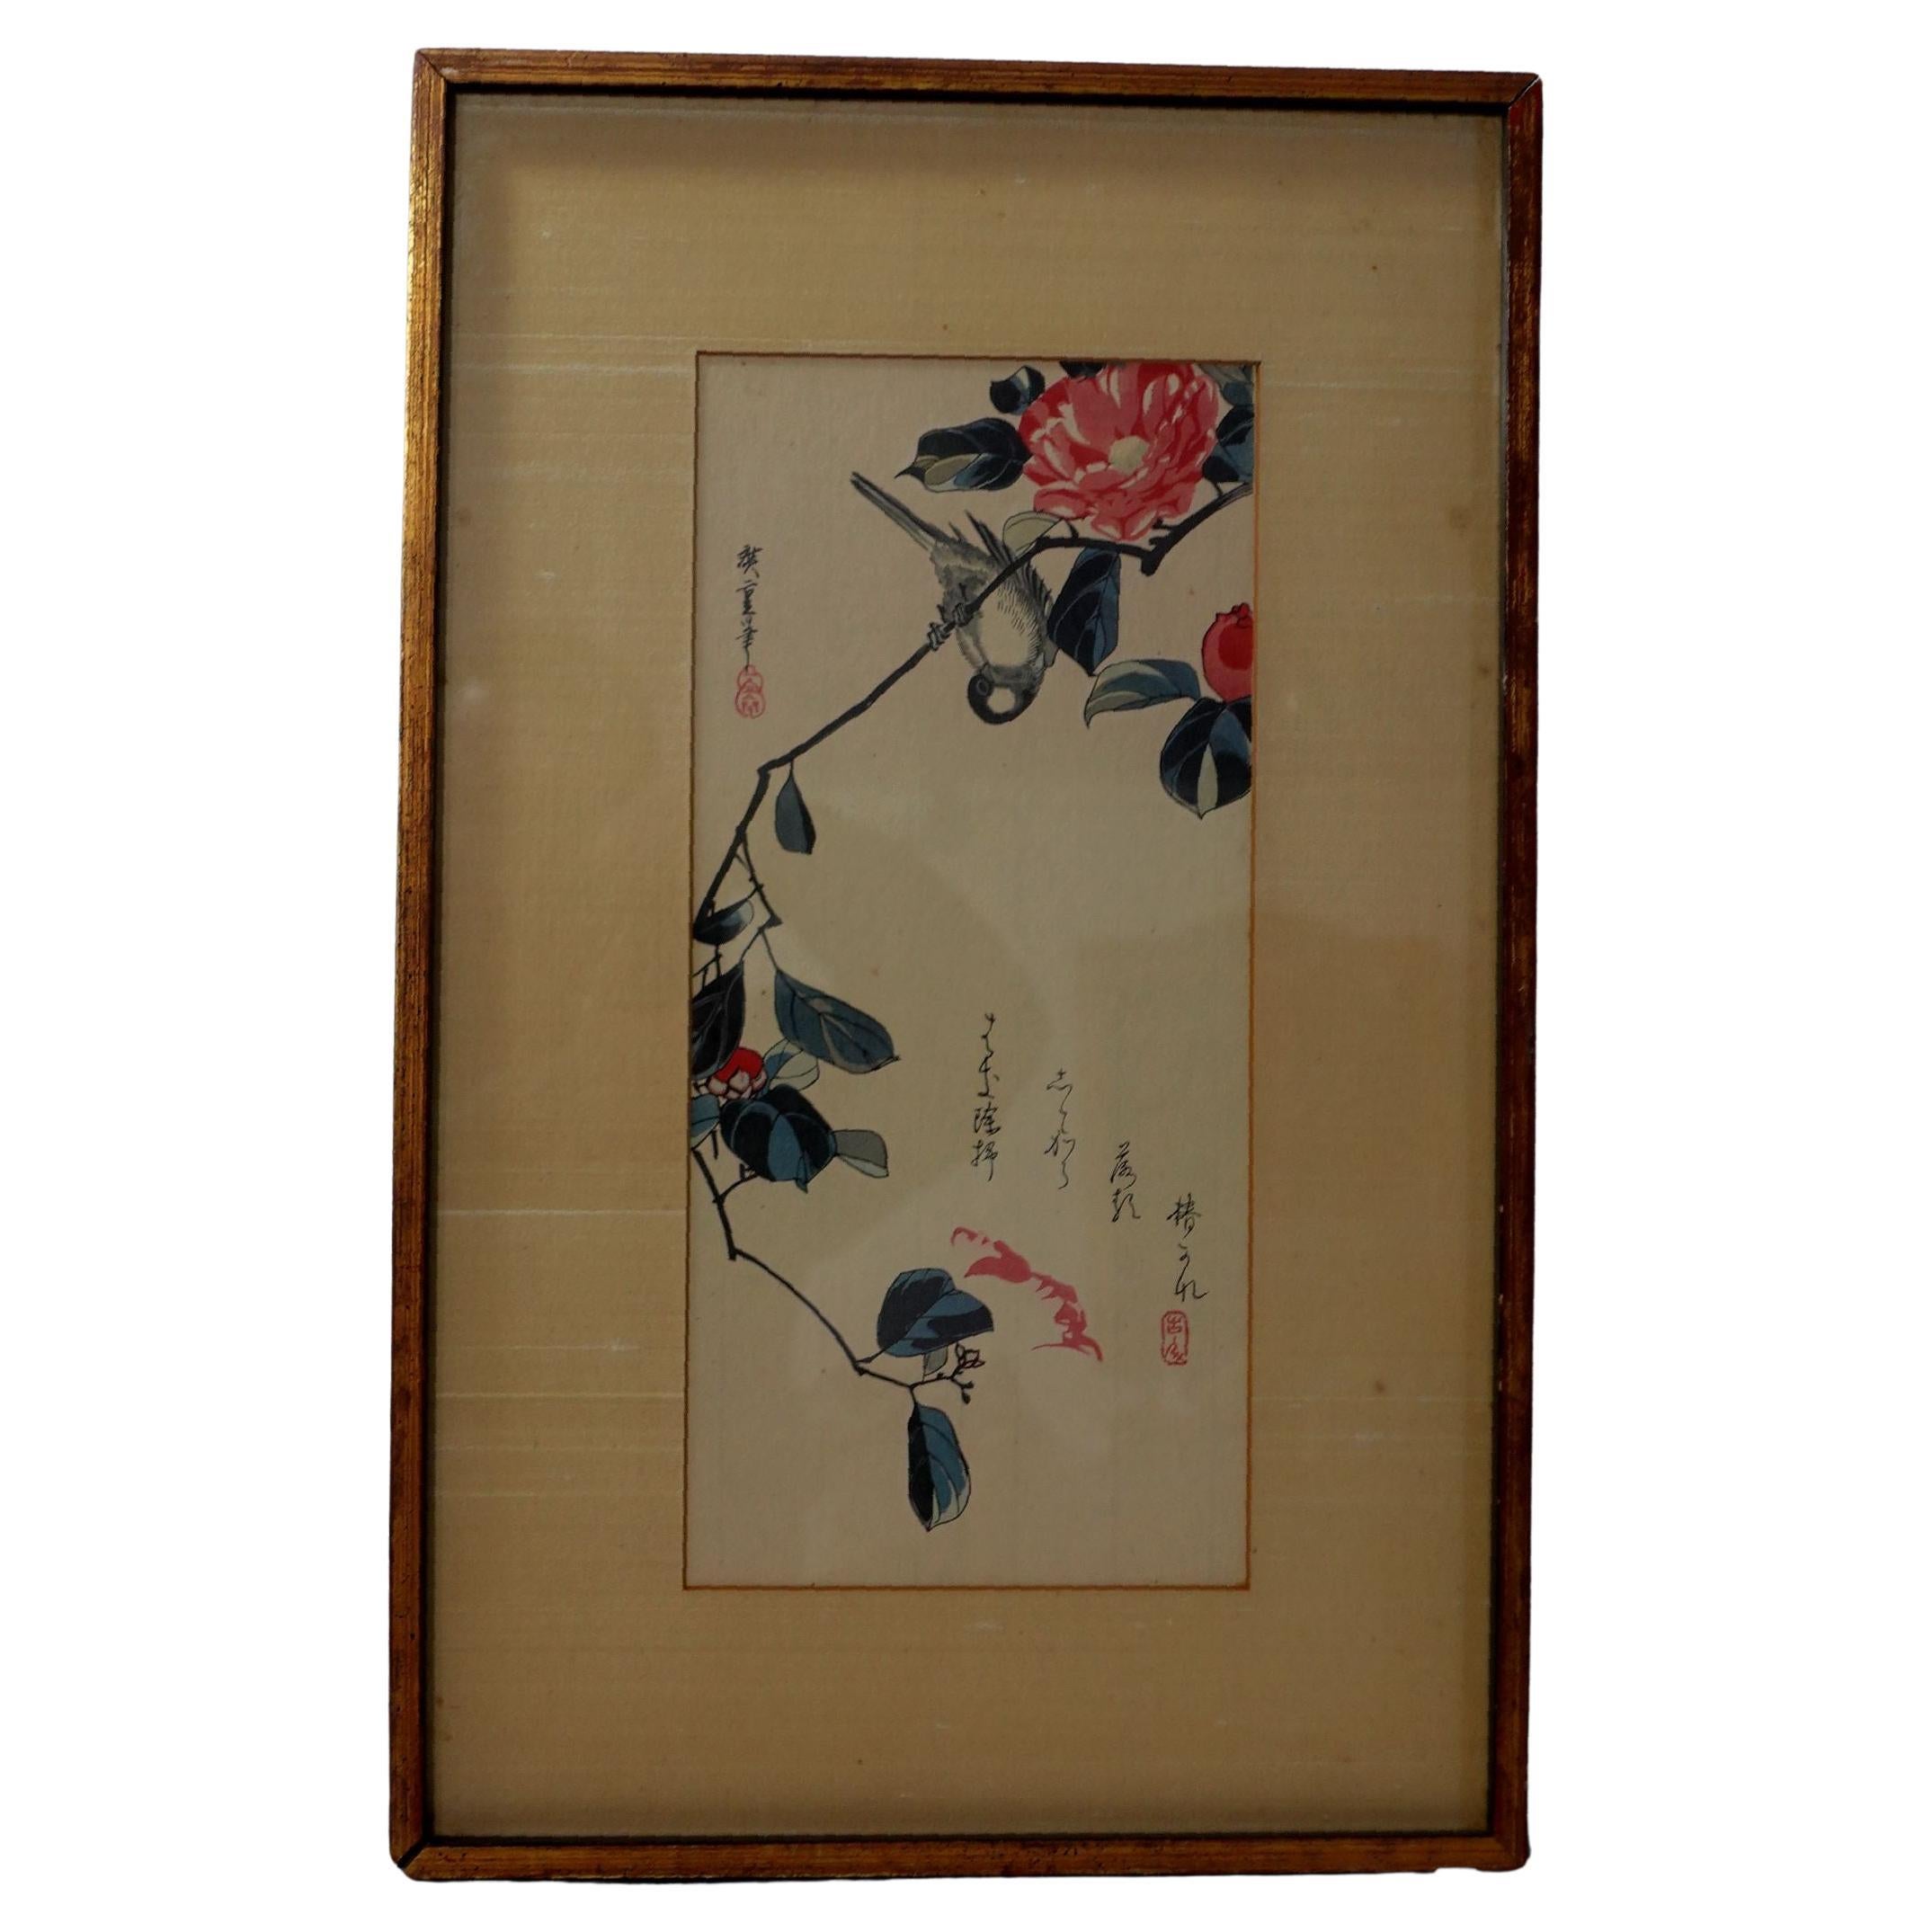 Utagawa Ando Hiroshige Holzschnitt-Druck J002, Japan,1797-1858